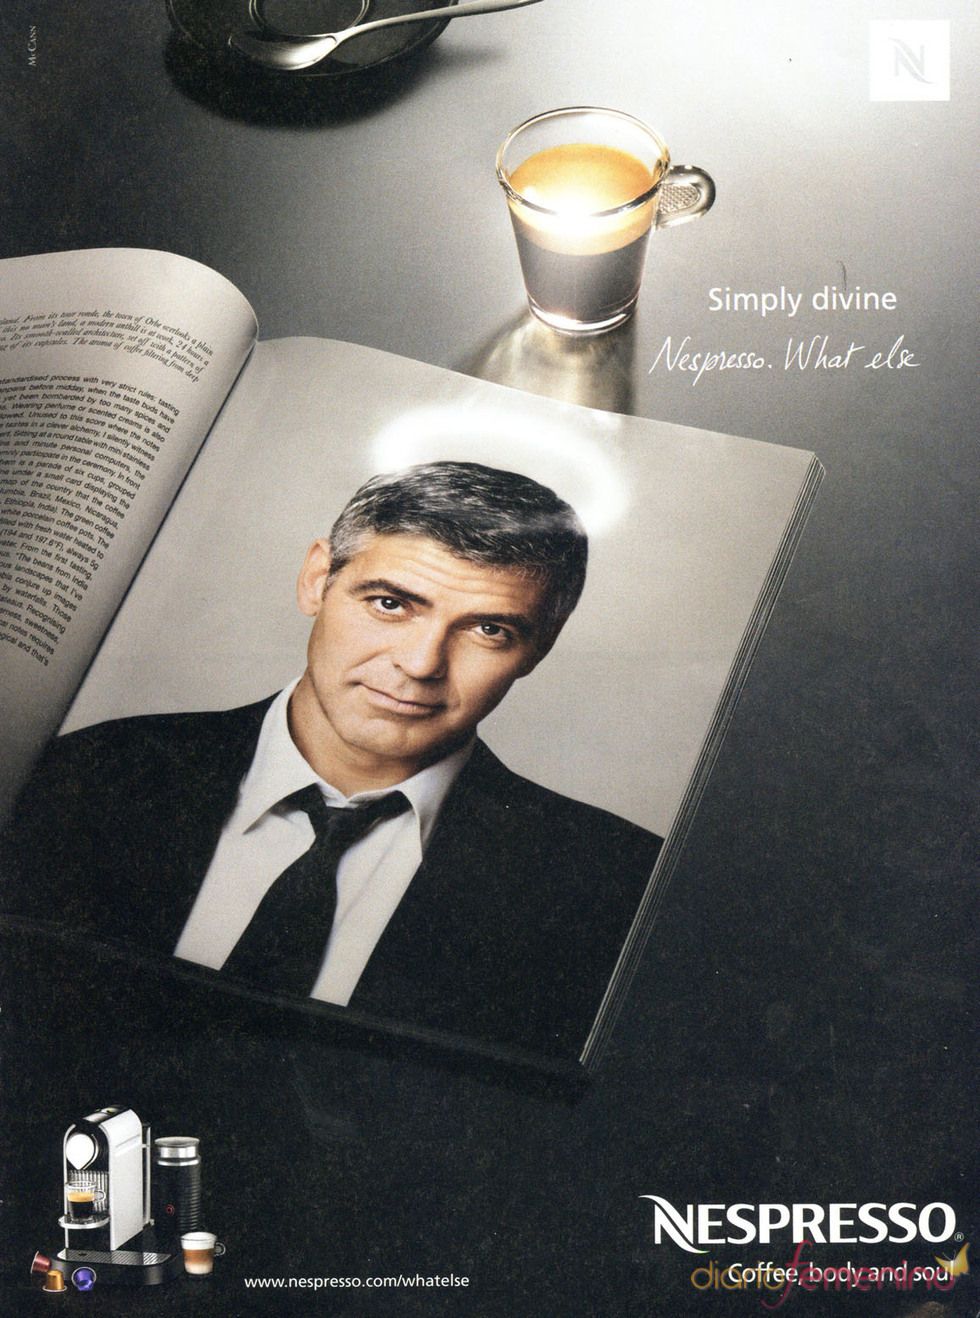 George Clooney Nespresso My favorite tv personalitieshosts